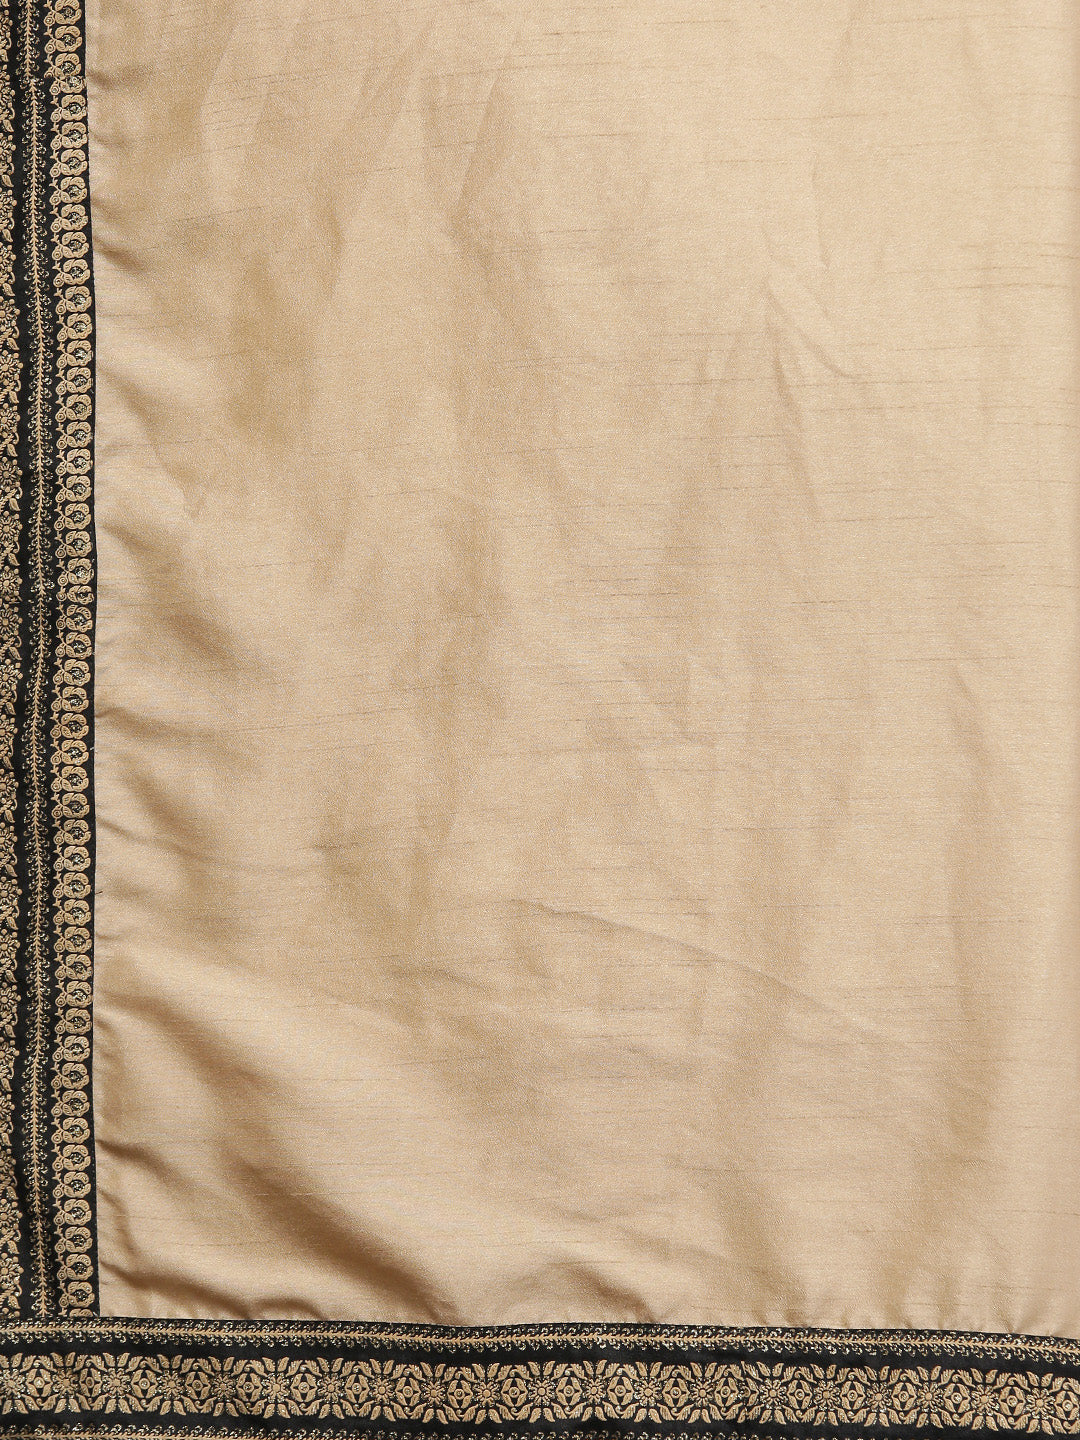 Women's Black Poly Silk Printed Kurta Pant With Dupatta- Ahalyaa